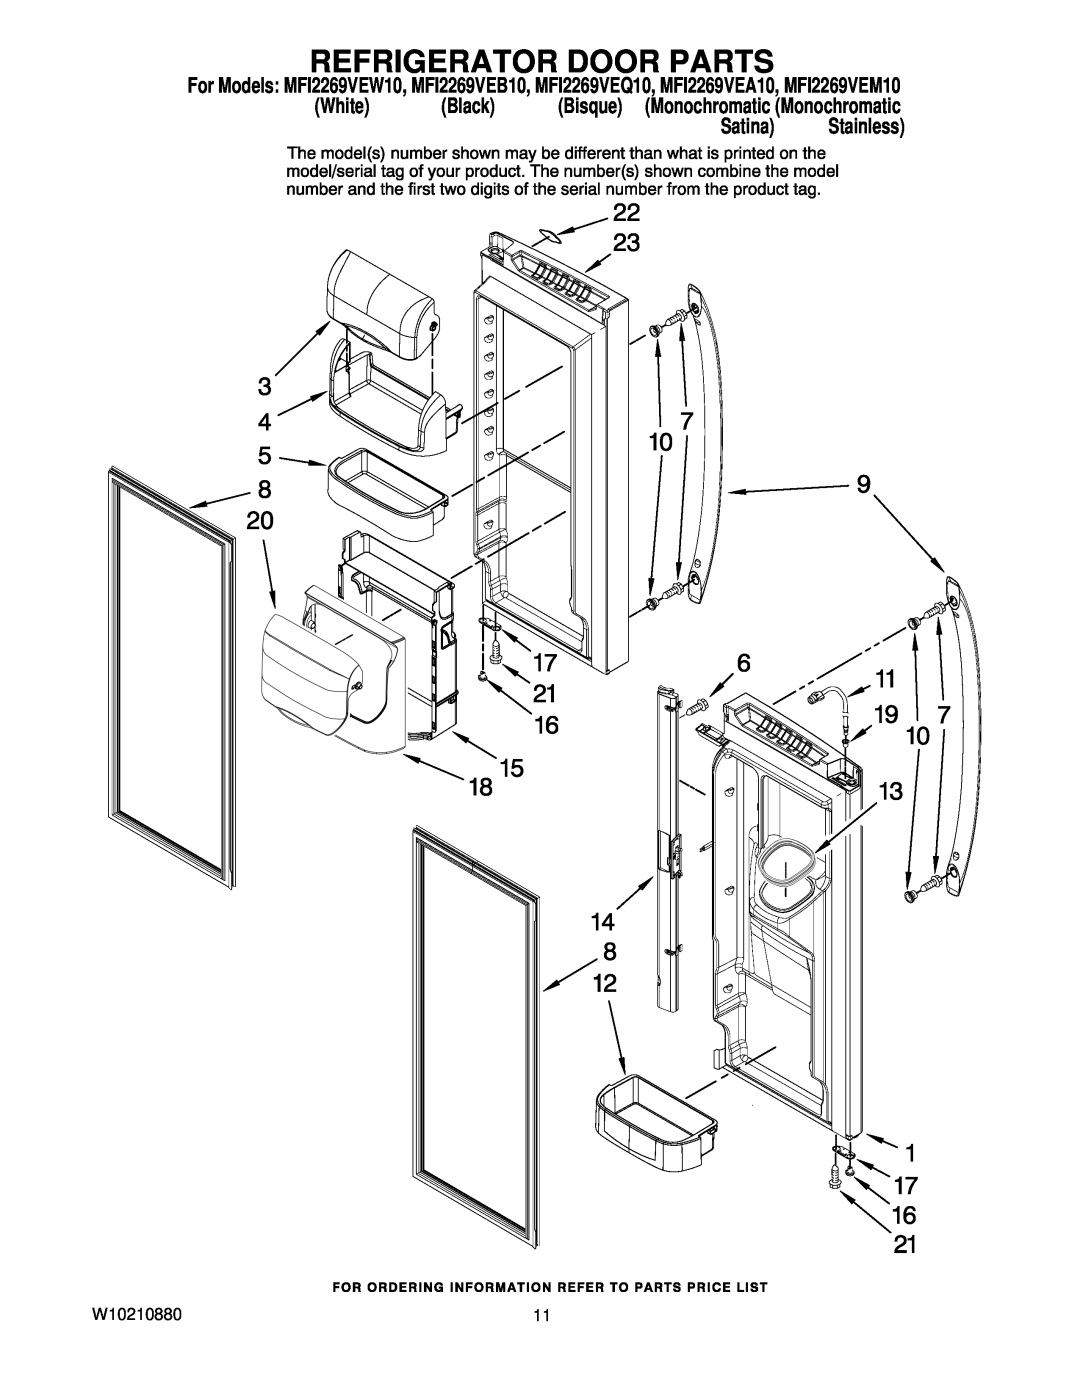 Maytag MFI2269VEA10 Refrigerator Door Parts, White Black Bisque Monochromatic Monochromatic, Satina Stainless, W10210880 